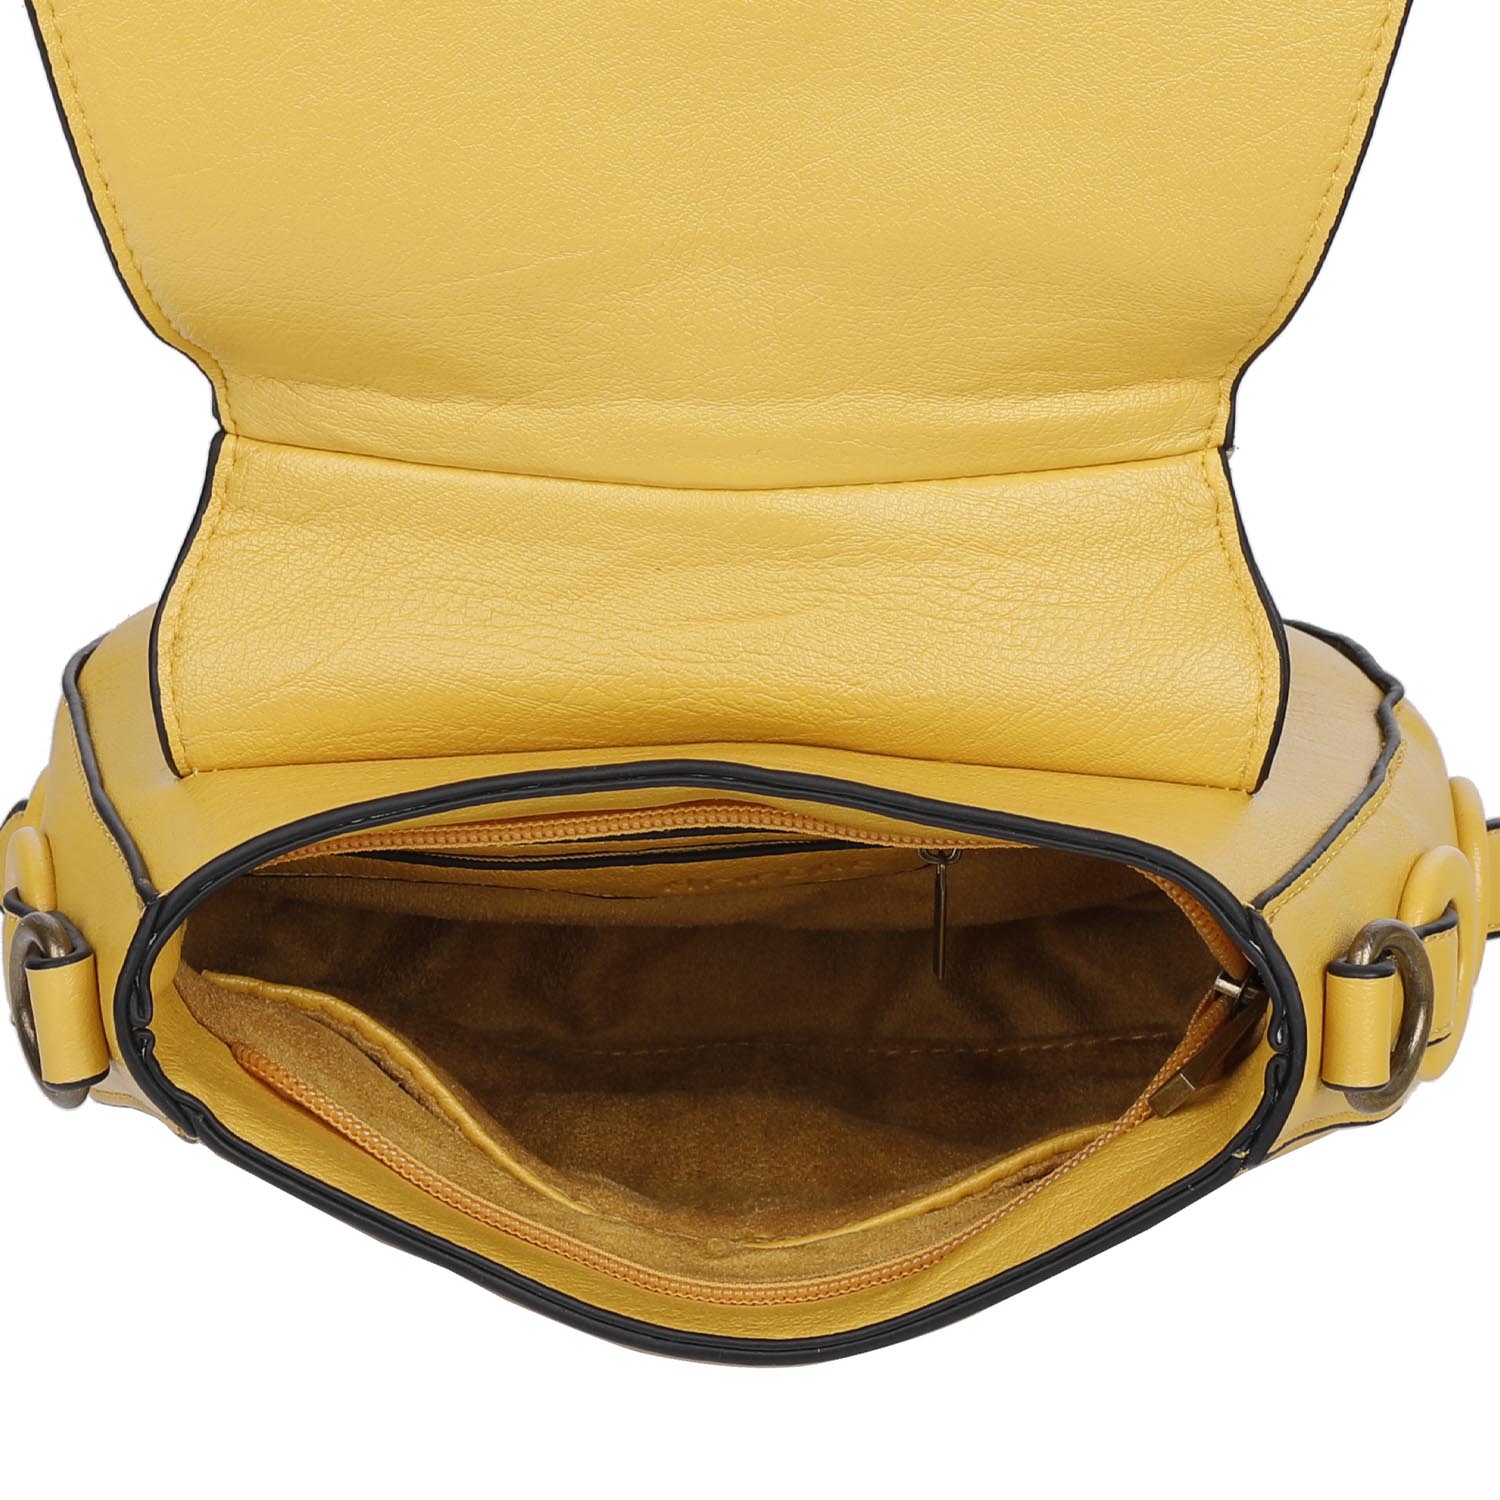 Carli Crossbody Handbag Purse - Nutty Mustard | Vegan Leather - Lavender Hills BeautyAmpere CreationsC125-NMUST